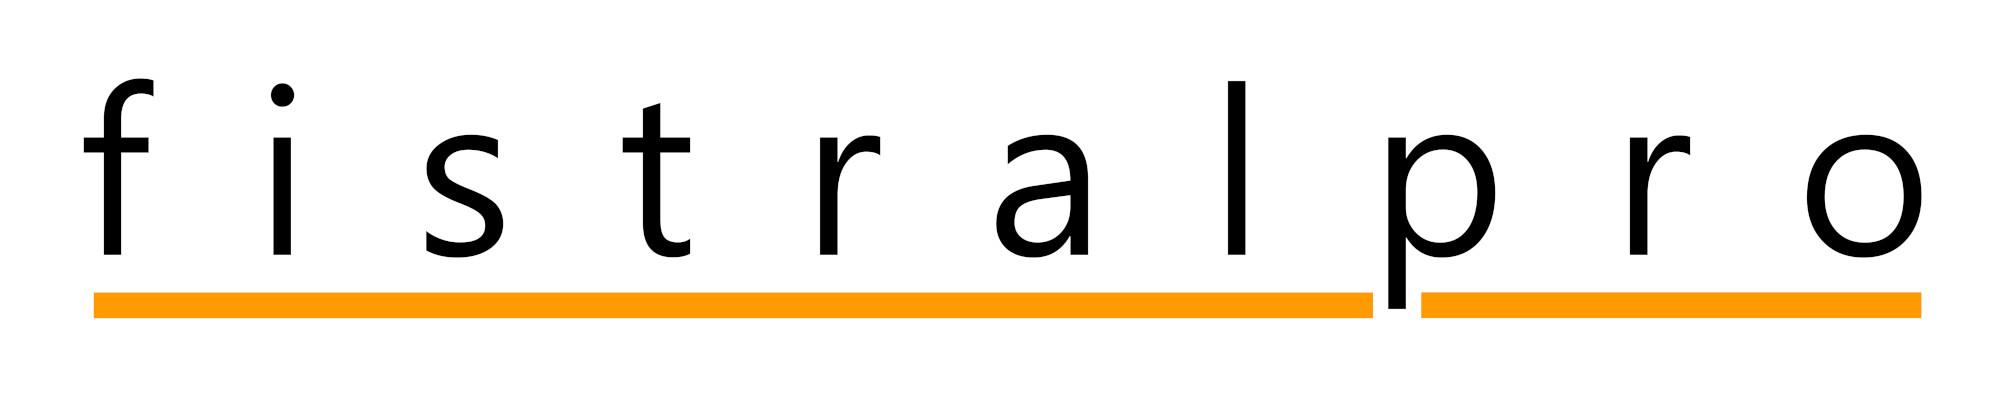 FistralPro Ltd logo